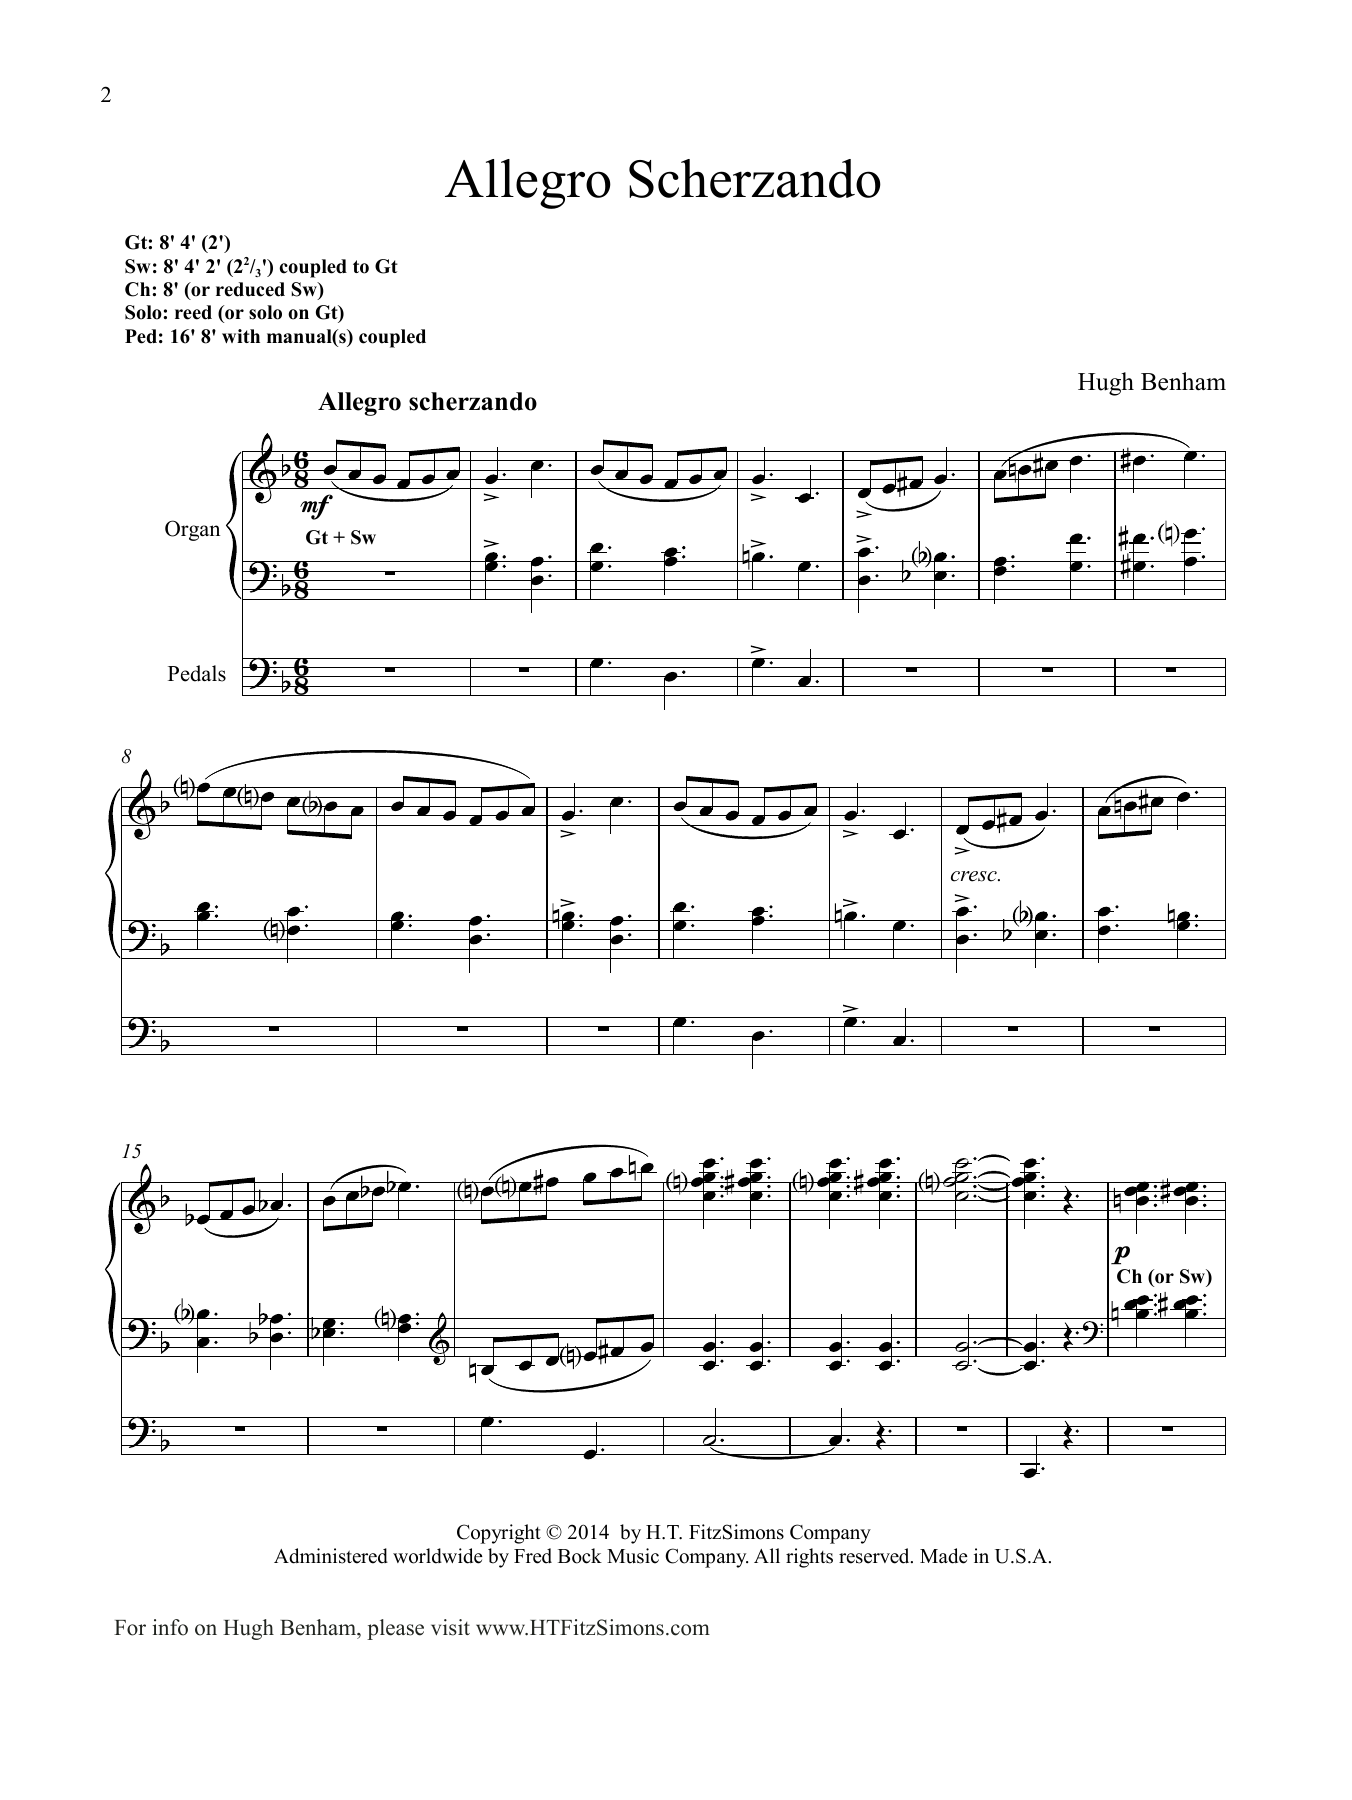 Download Hugh Benham Allegro Scherzando Sheet Music